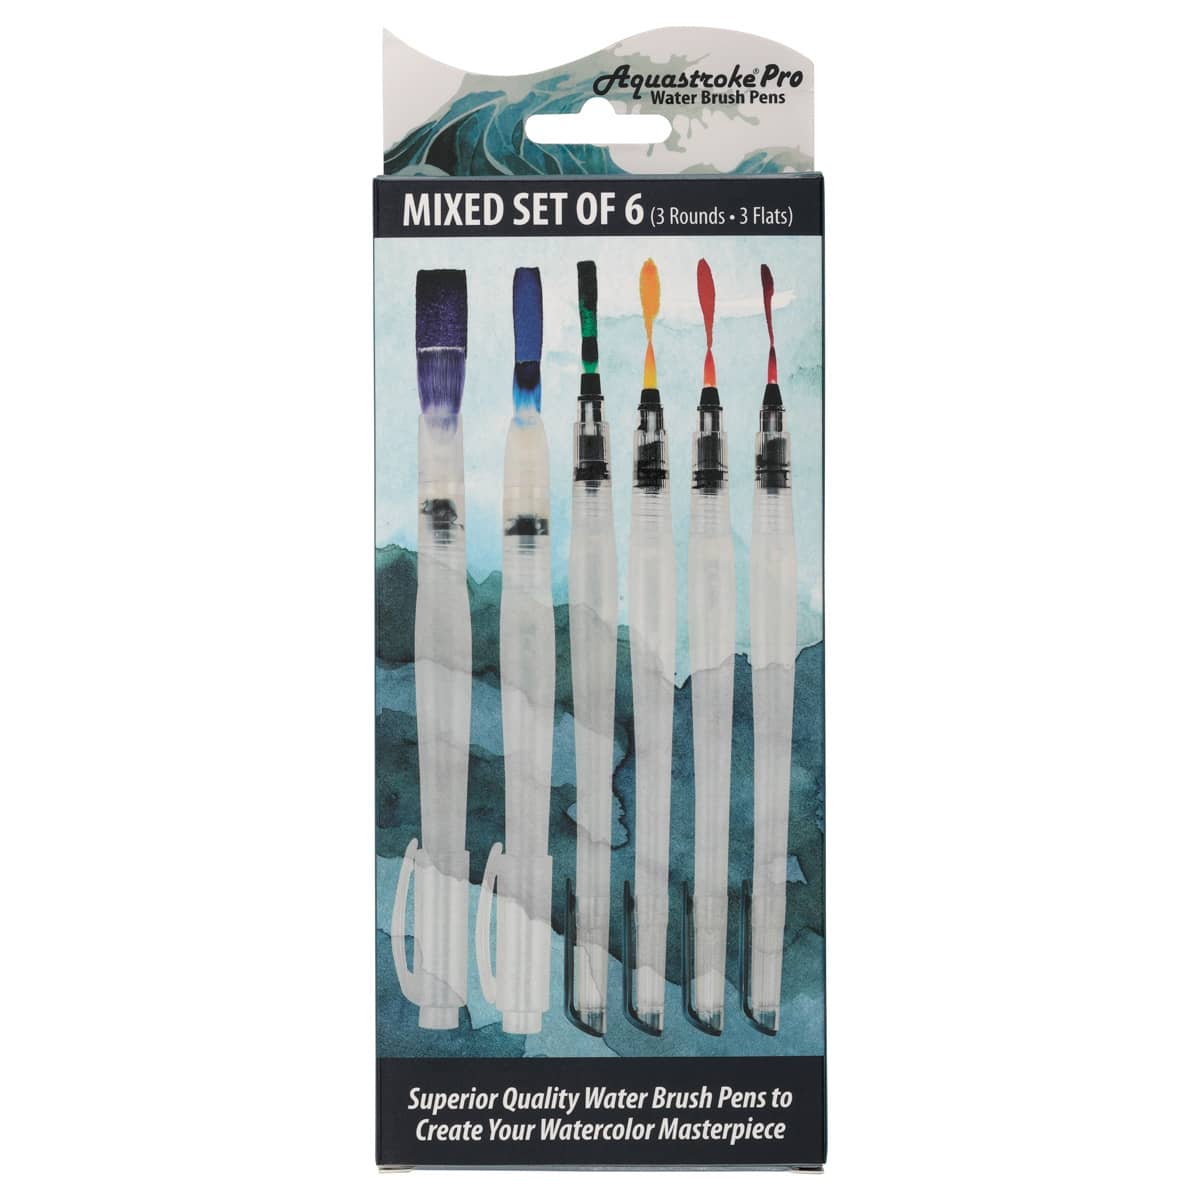 Aquastroke Pro Water Brush Pen Set of 6